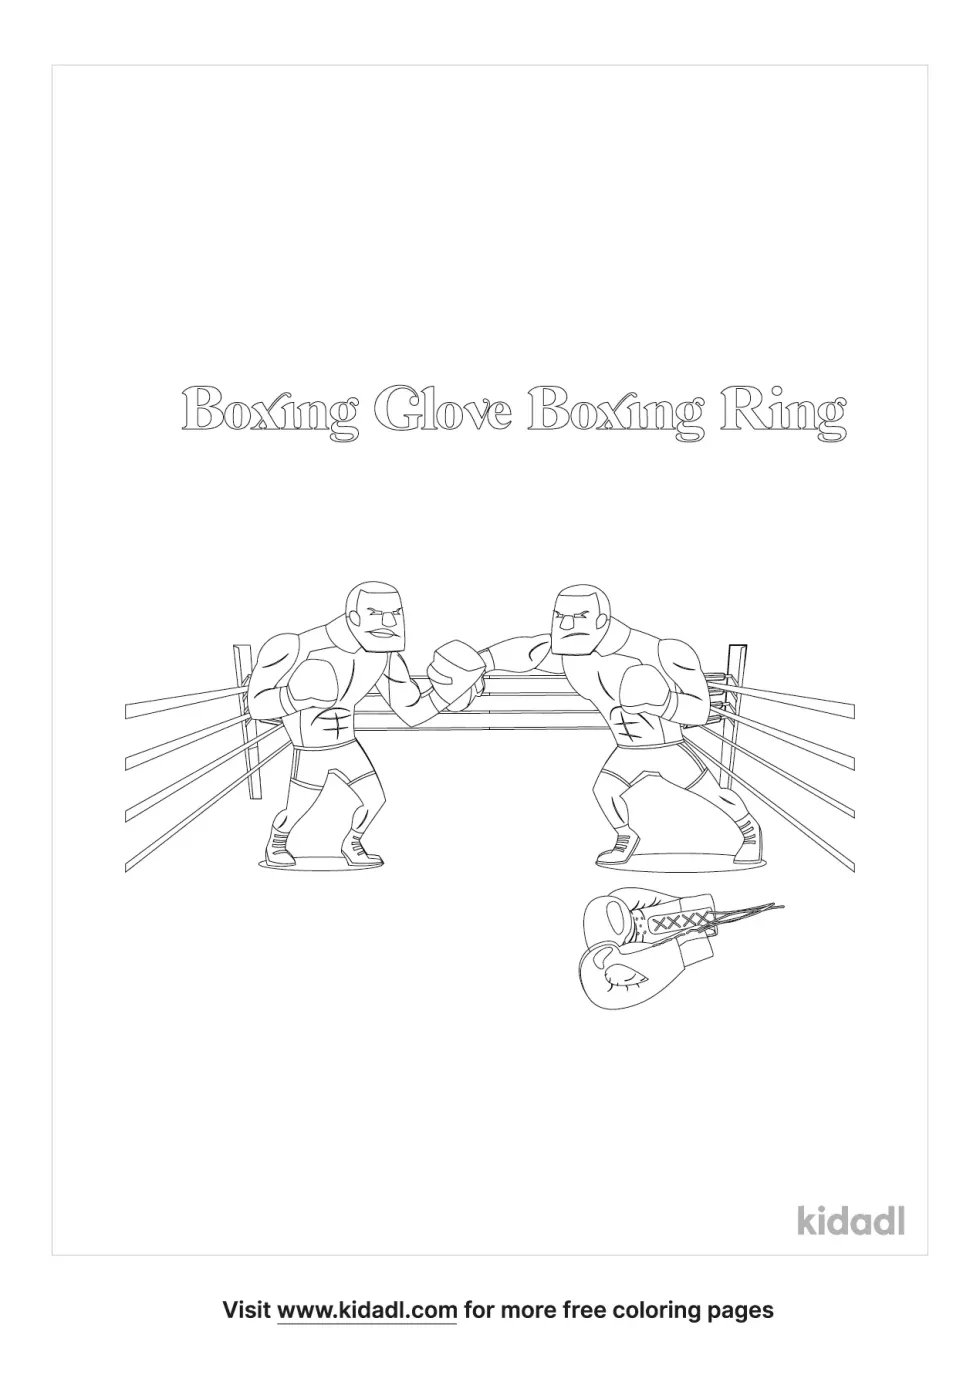 Boxing Glove Boxing Ring